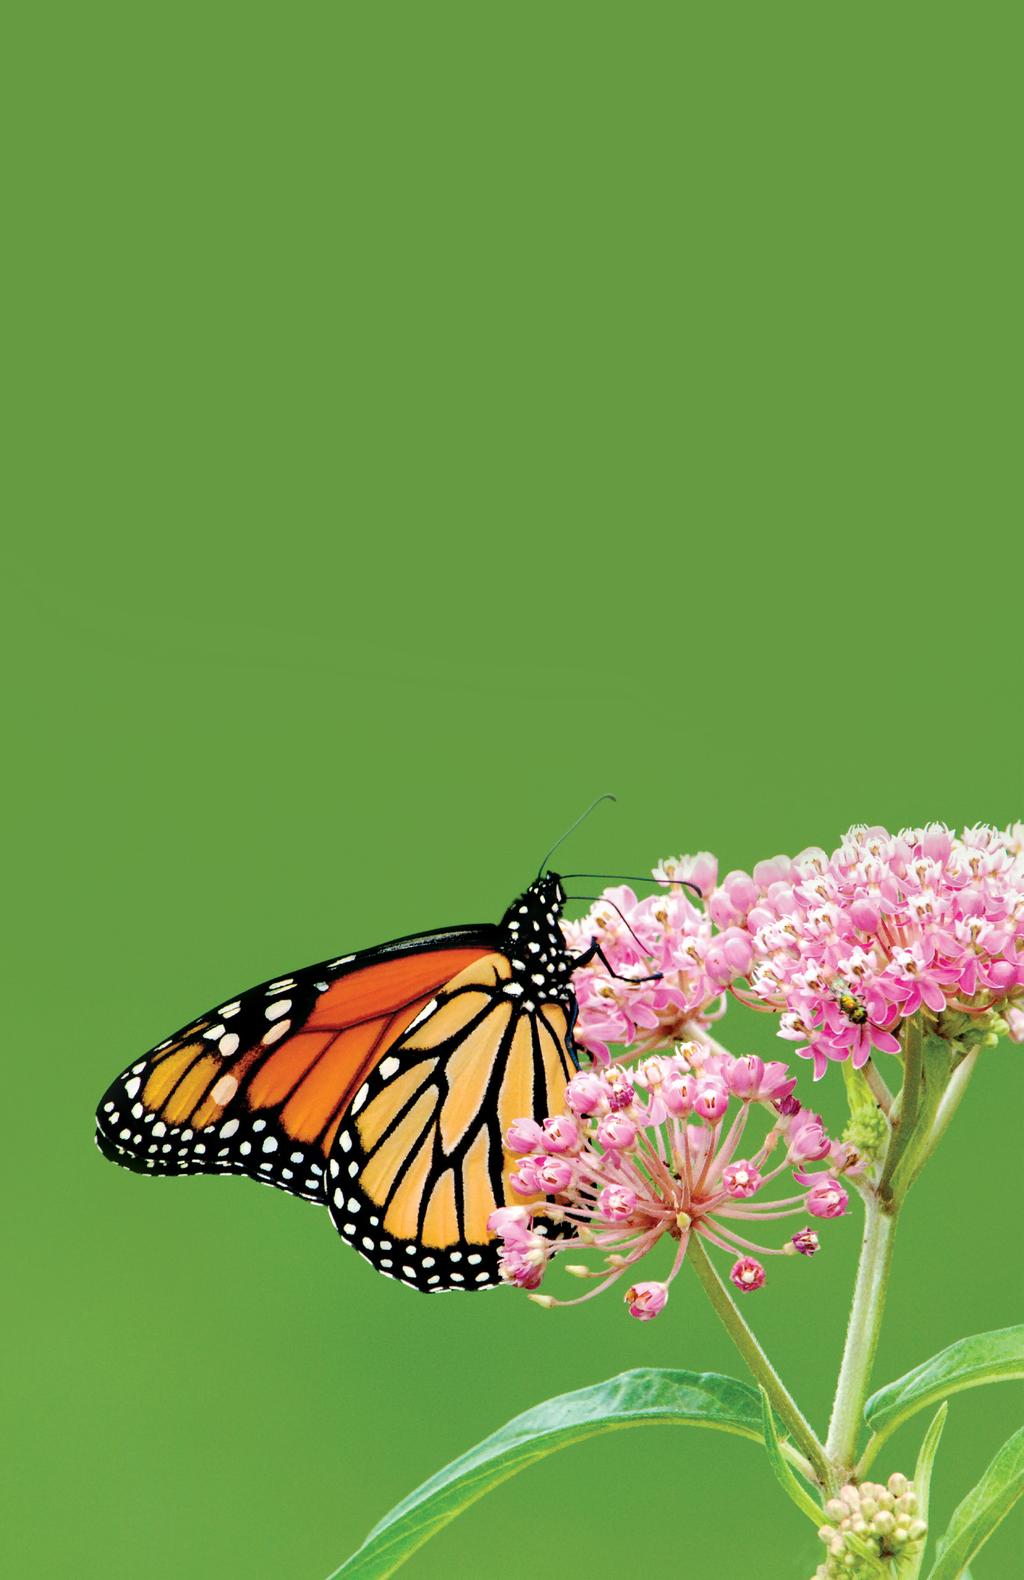 The population of Monarch Butterflies